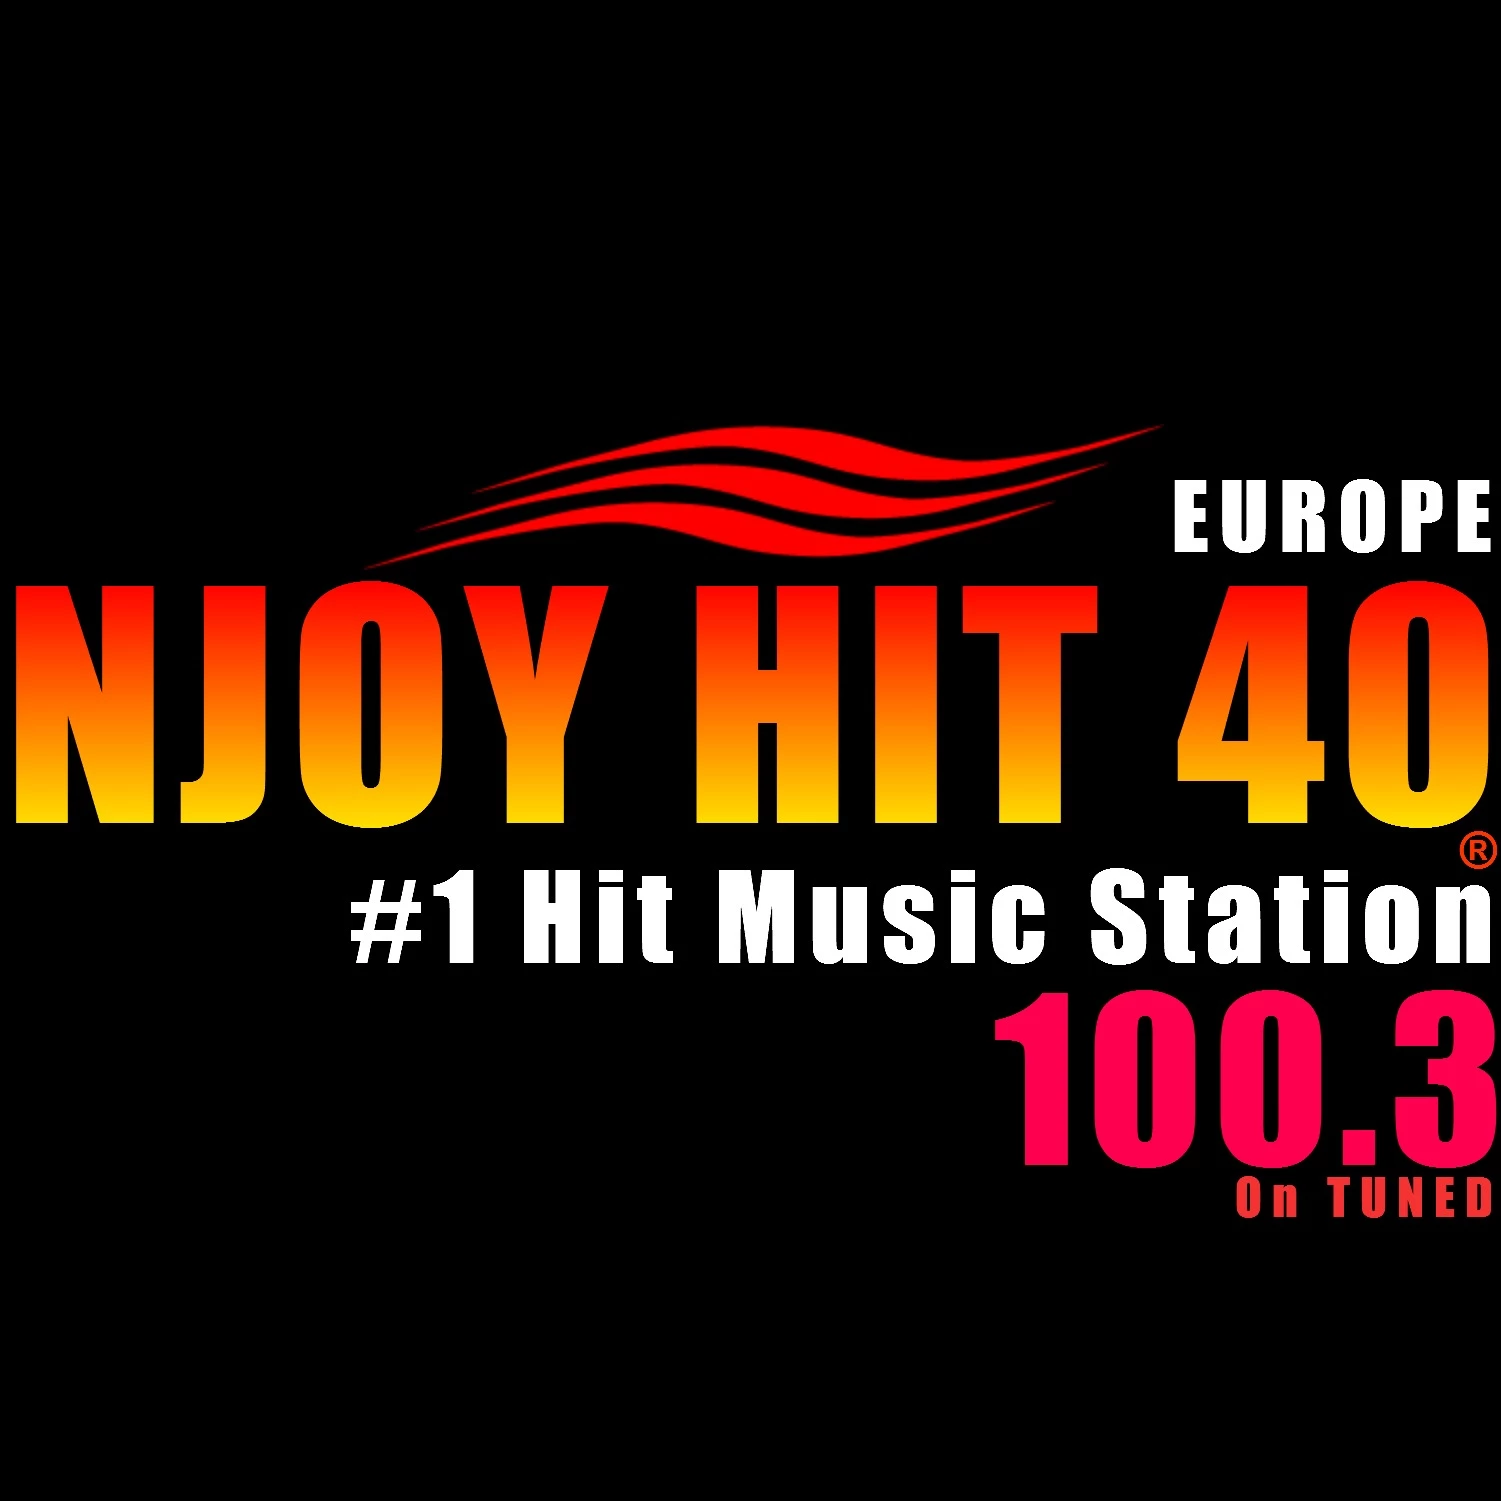 Njoy Hit 40 Medias One 100.3 Mhz